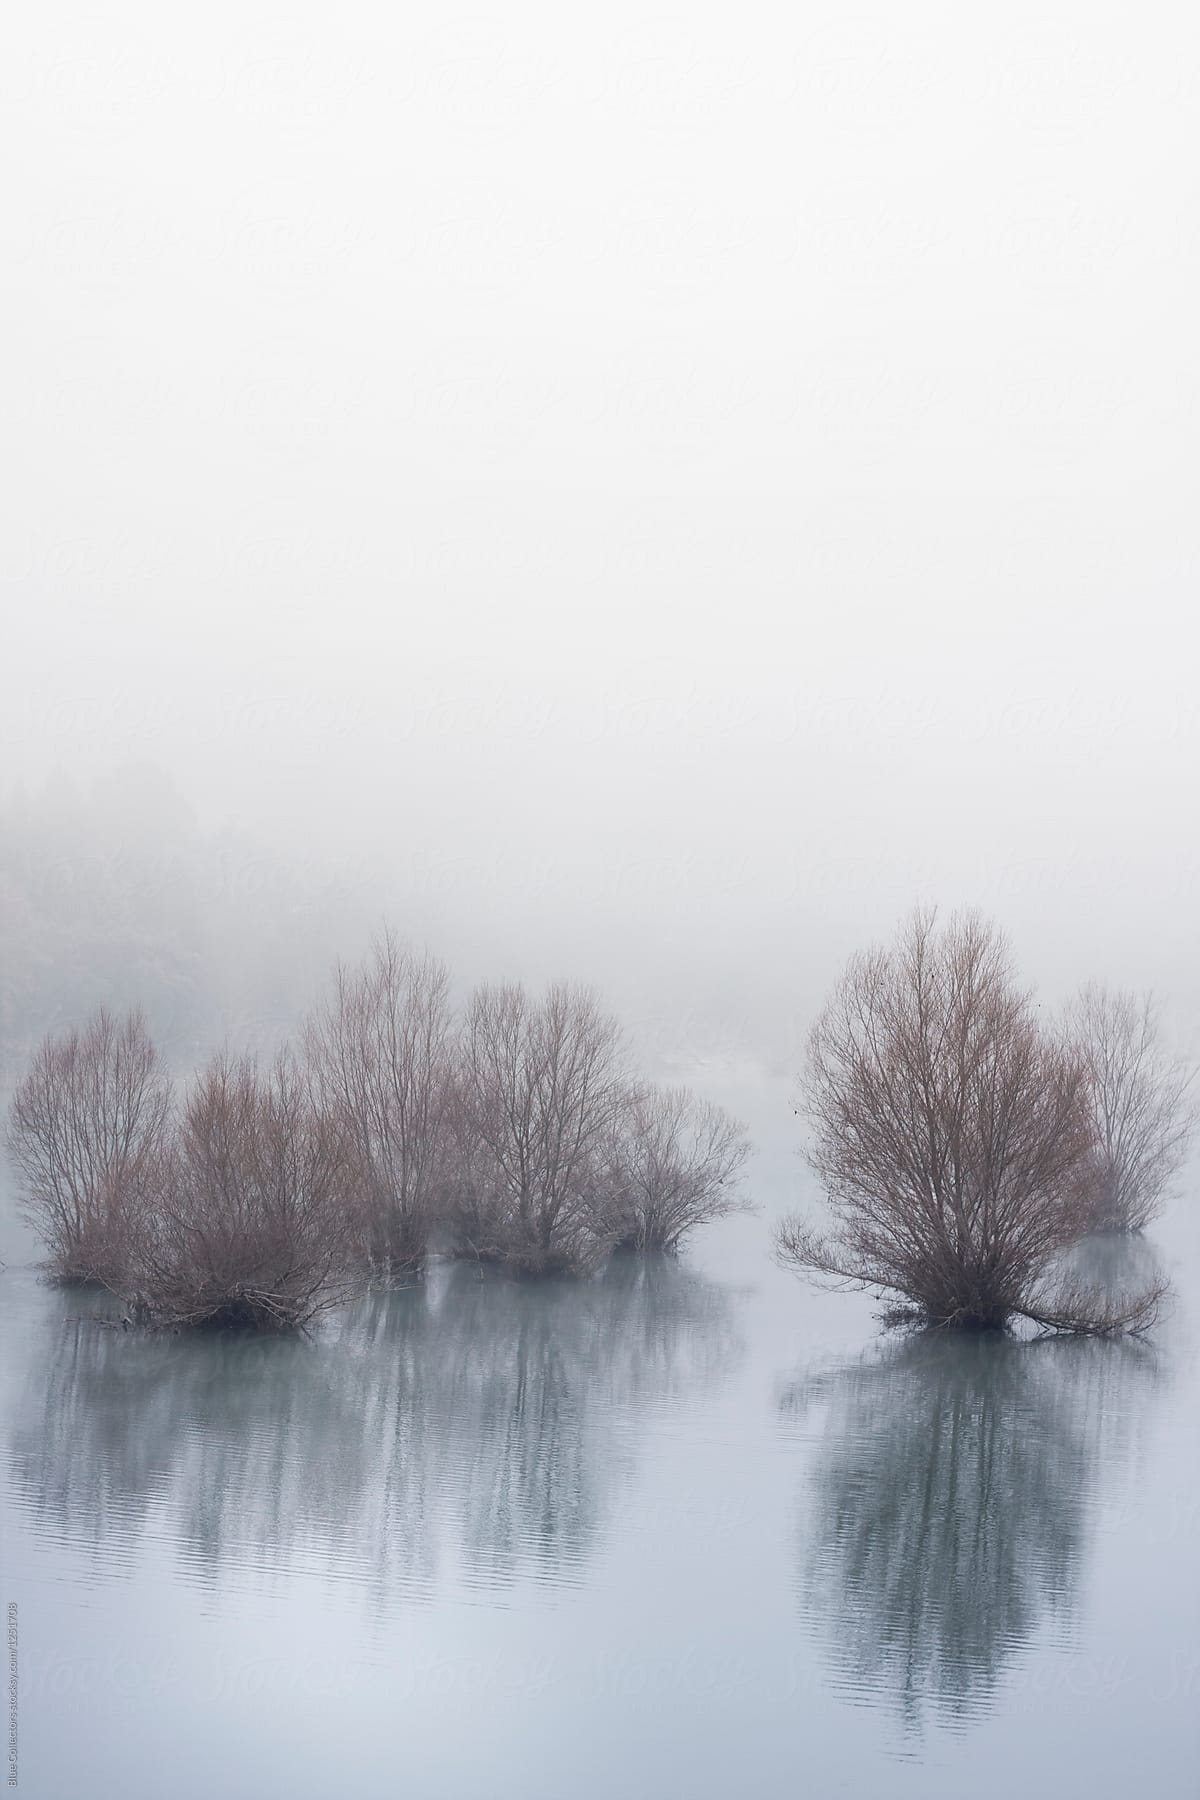 Lake landscape In The Morning Mist